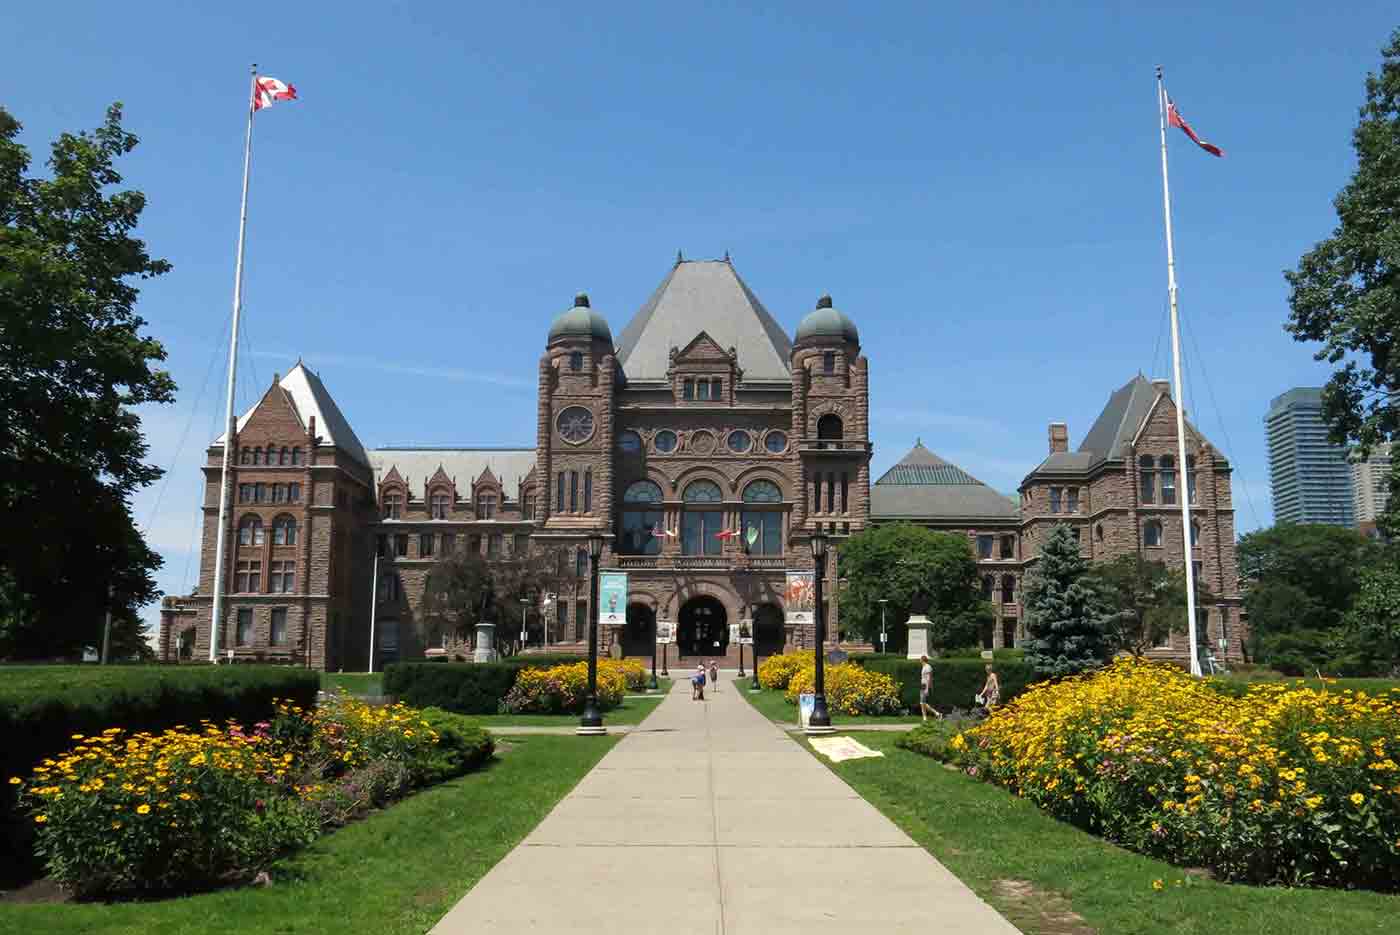 Ontario Legislative Assembly